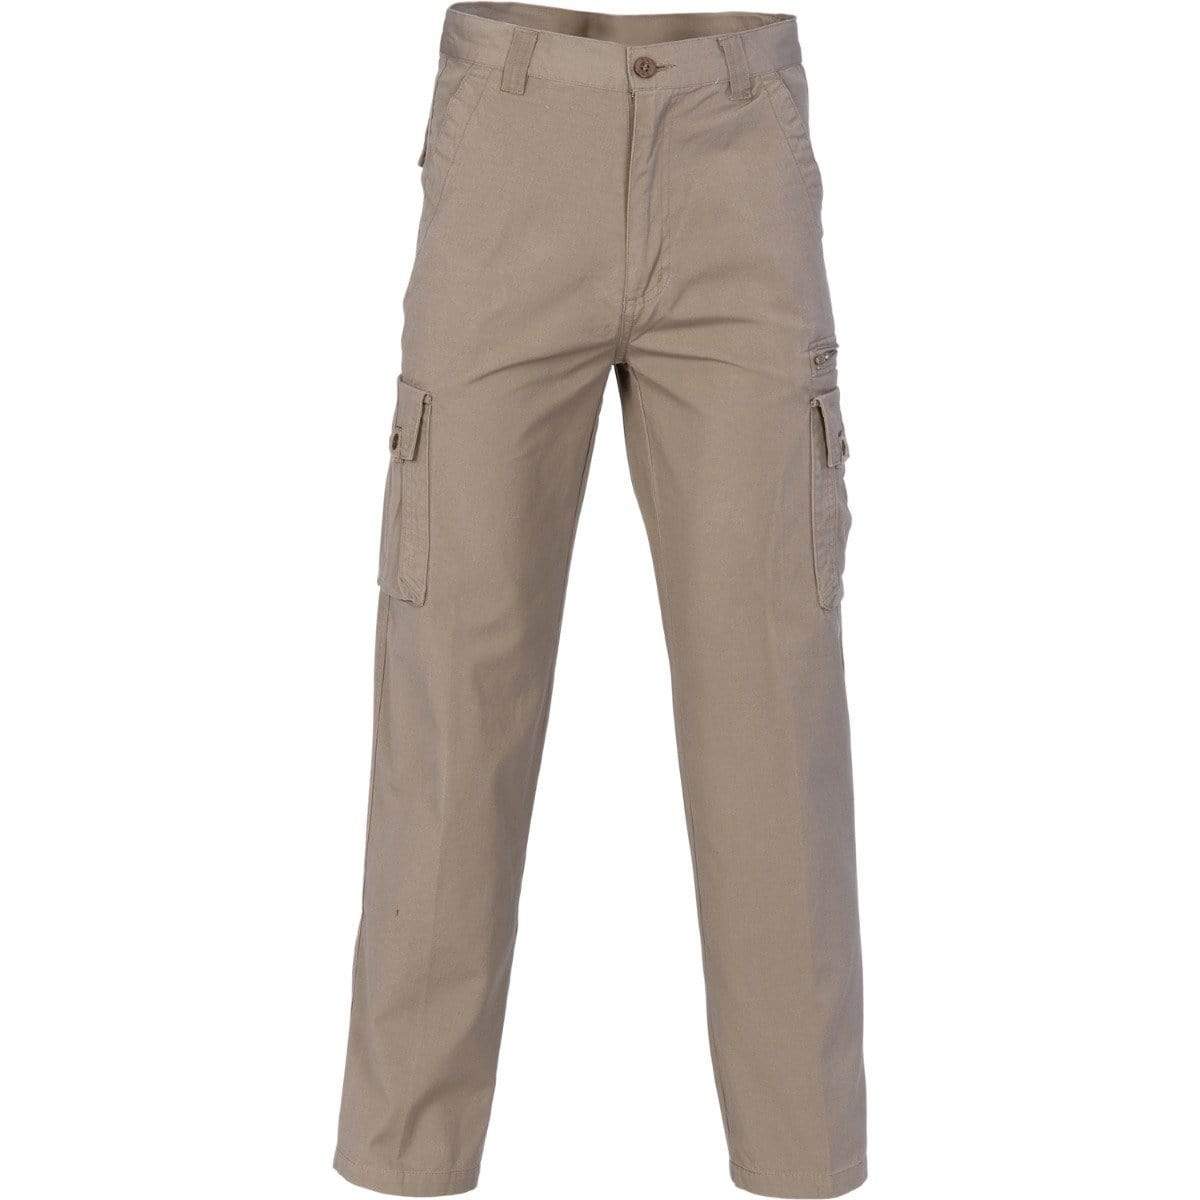 Dnc Workwear Island Cotton Duck Weave Cargo Pants - 4535 Work Wear DNC Workwear Bone 82R 